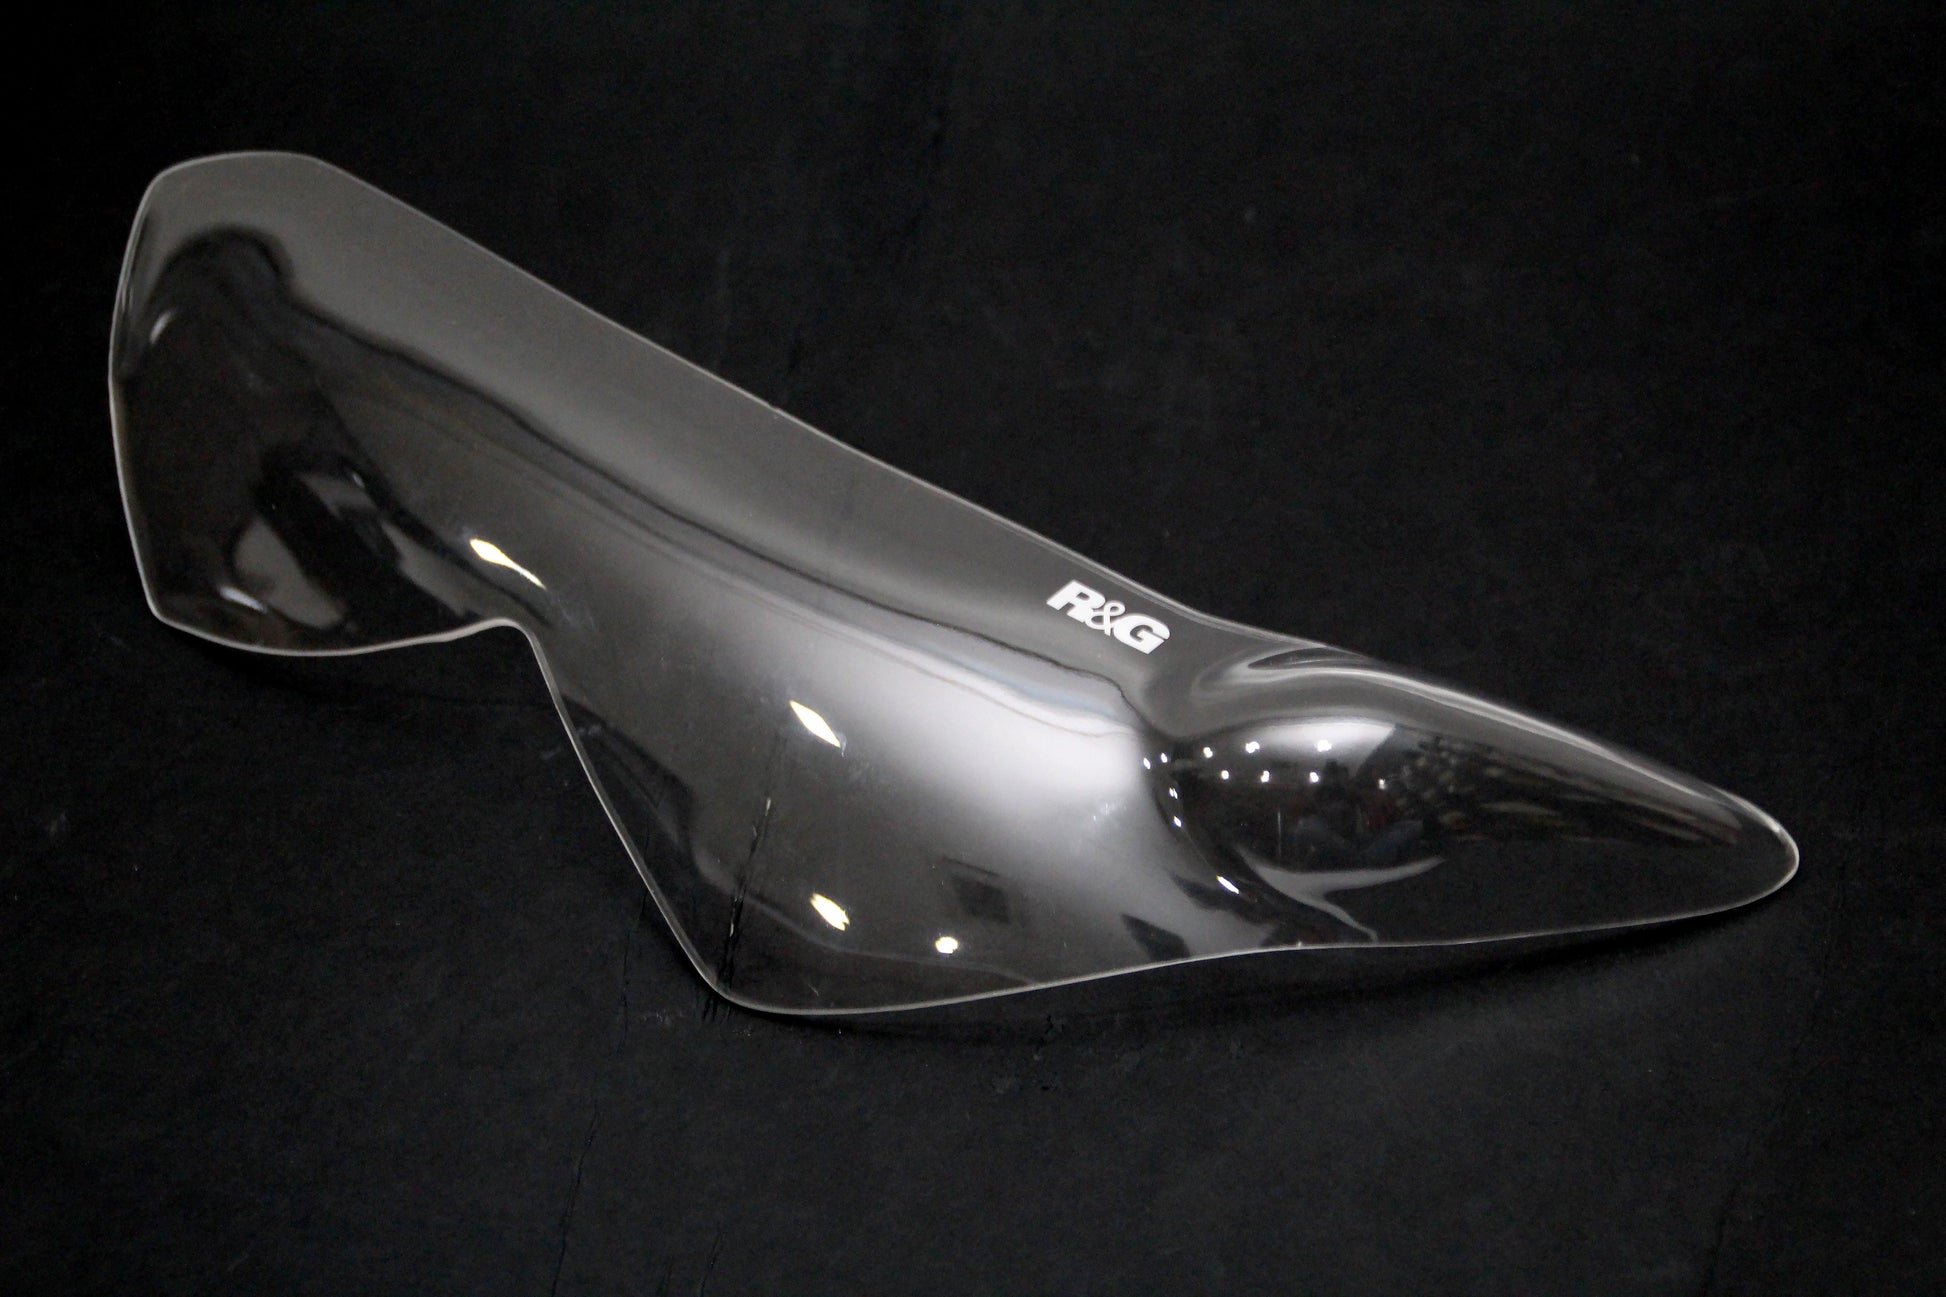 R&G Headlight Shields fits for Kawasaki ZZR1400 ('12-) - Durian Bikers